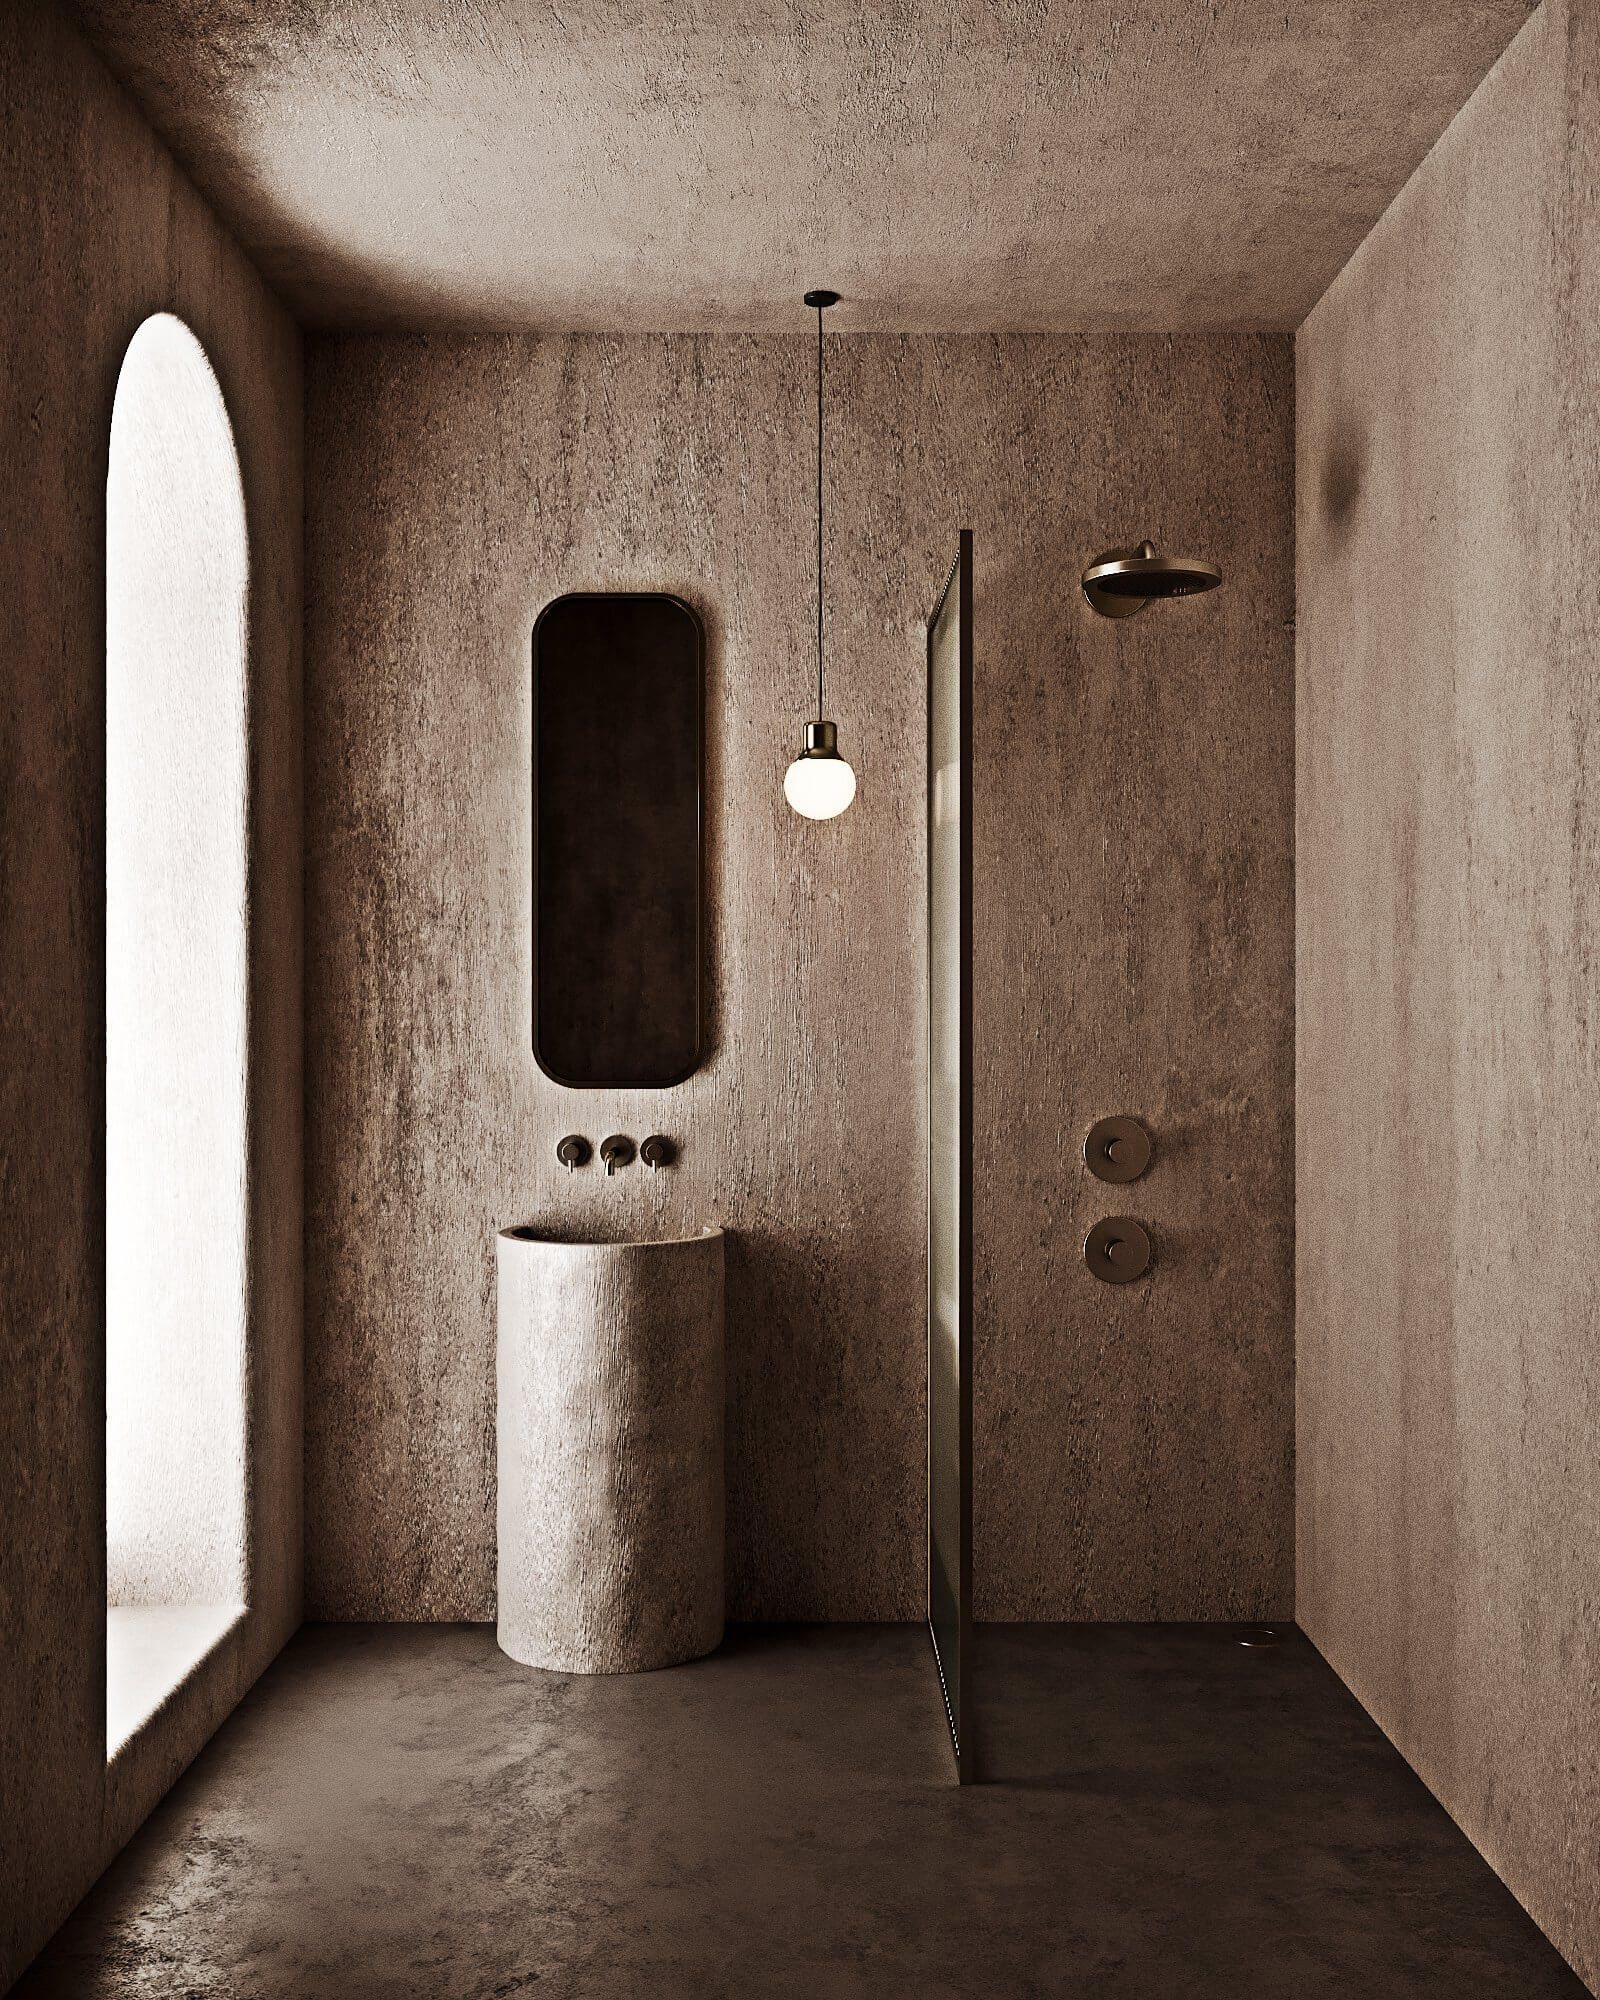 Monochrome bathroom design shower wash basin - cgi visualization